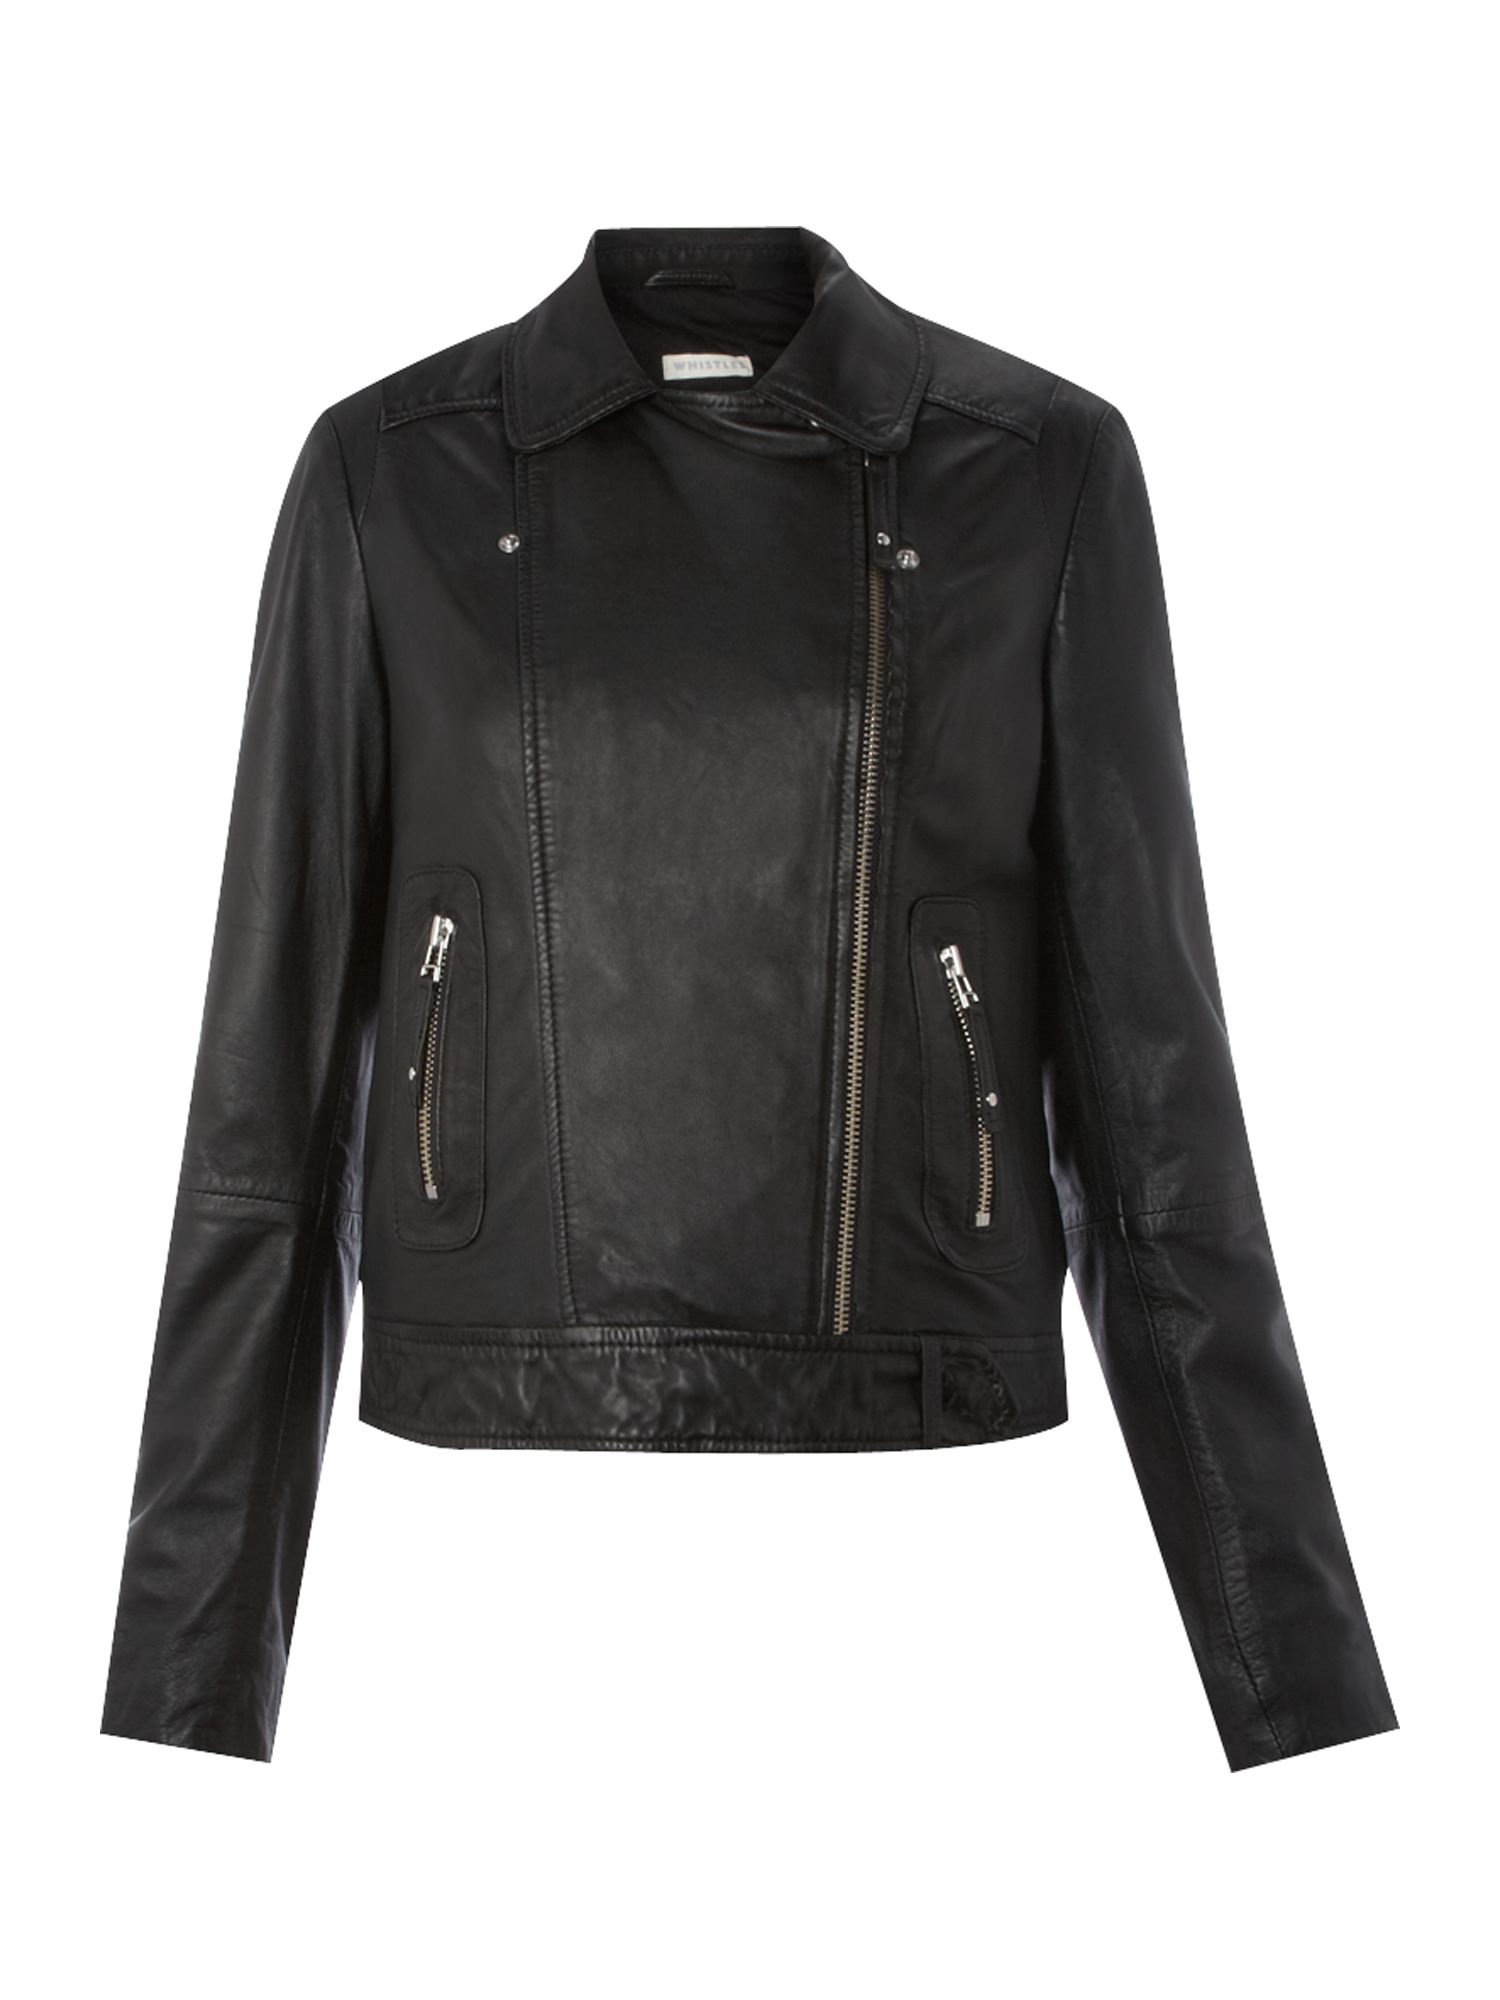 Whistles Dree Leather Biker Jacket in Black | Lyst